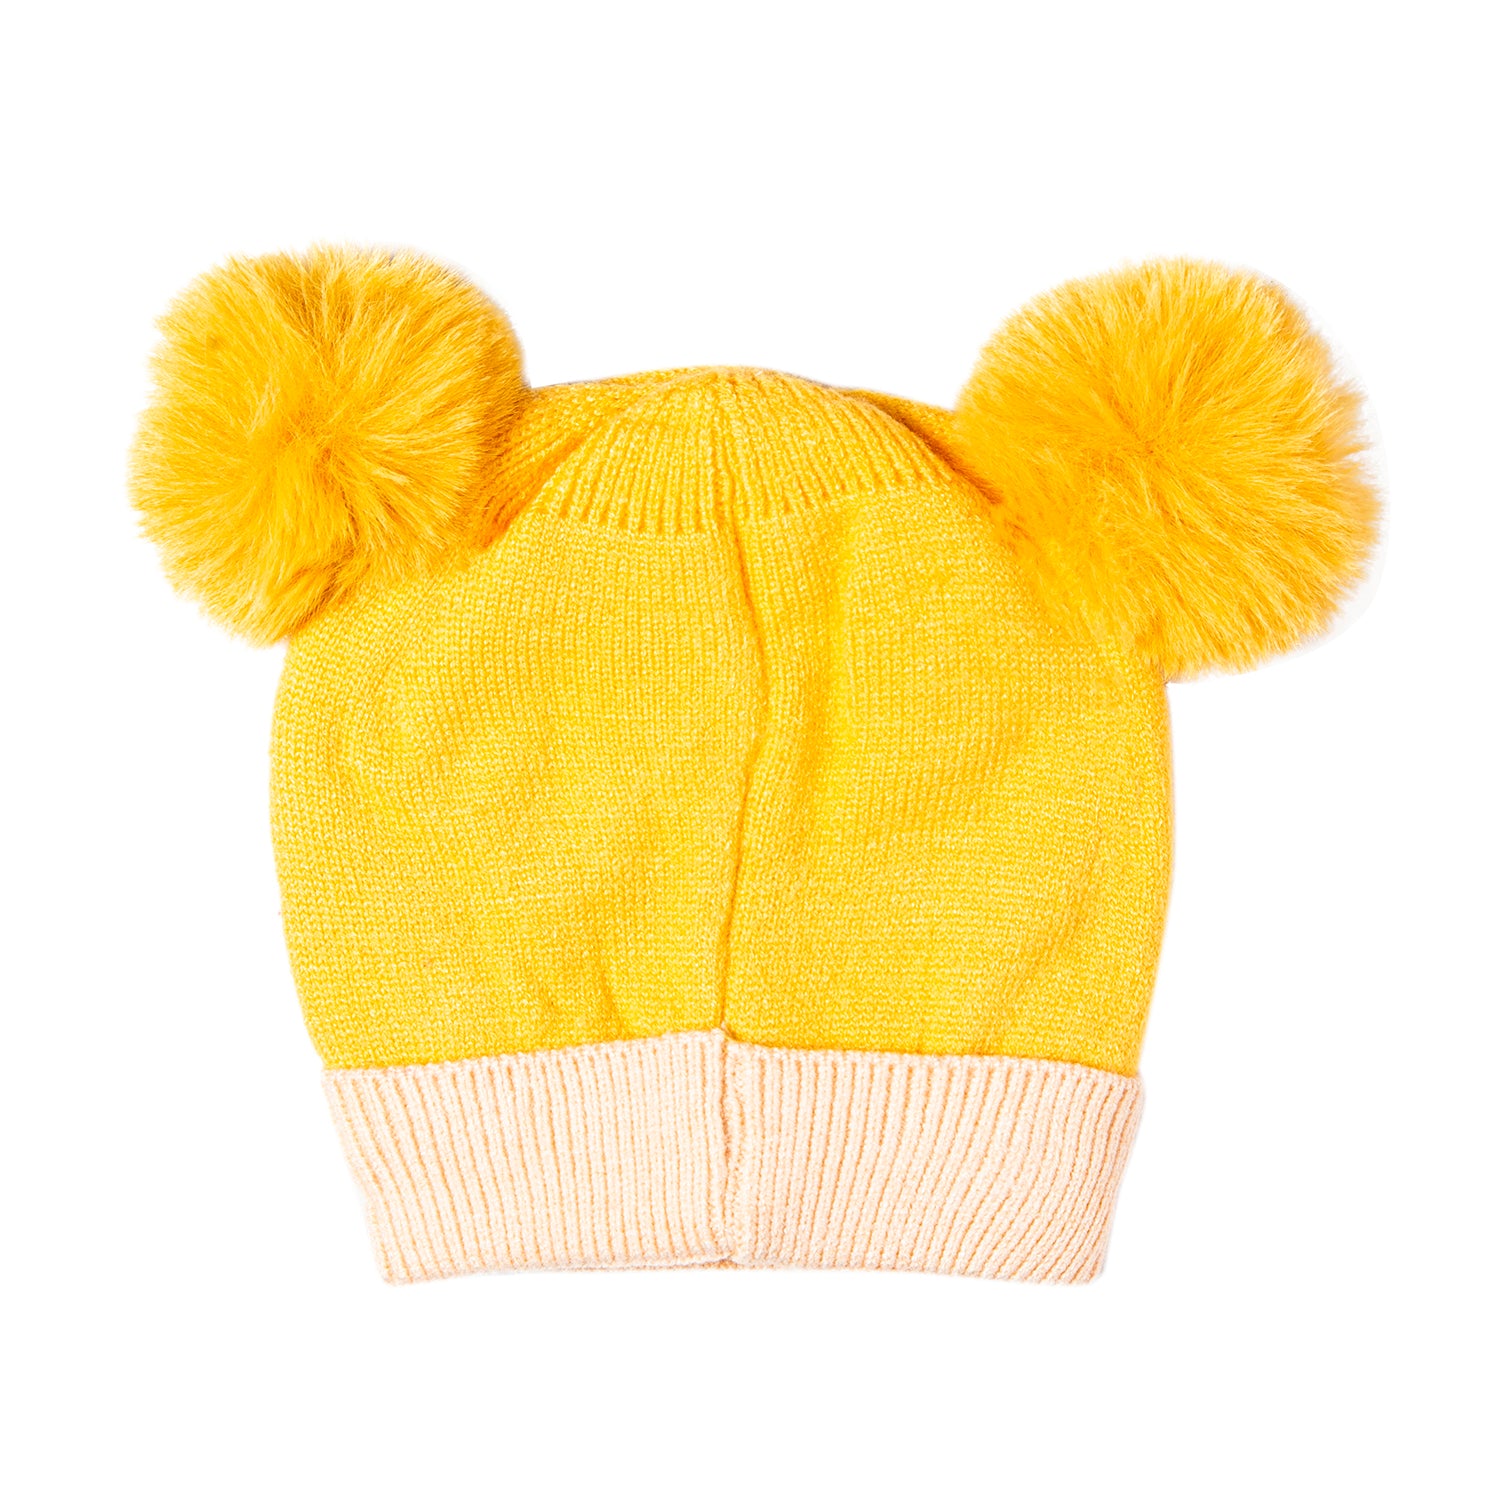 Knit Woollen Cap Pom Pom Bear Yellow - Baby Moo